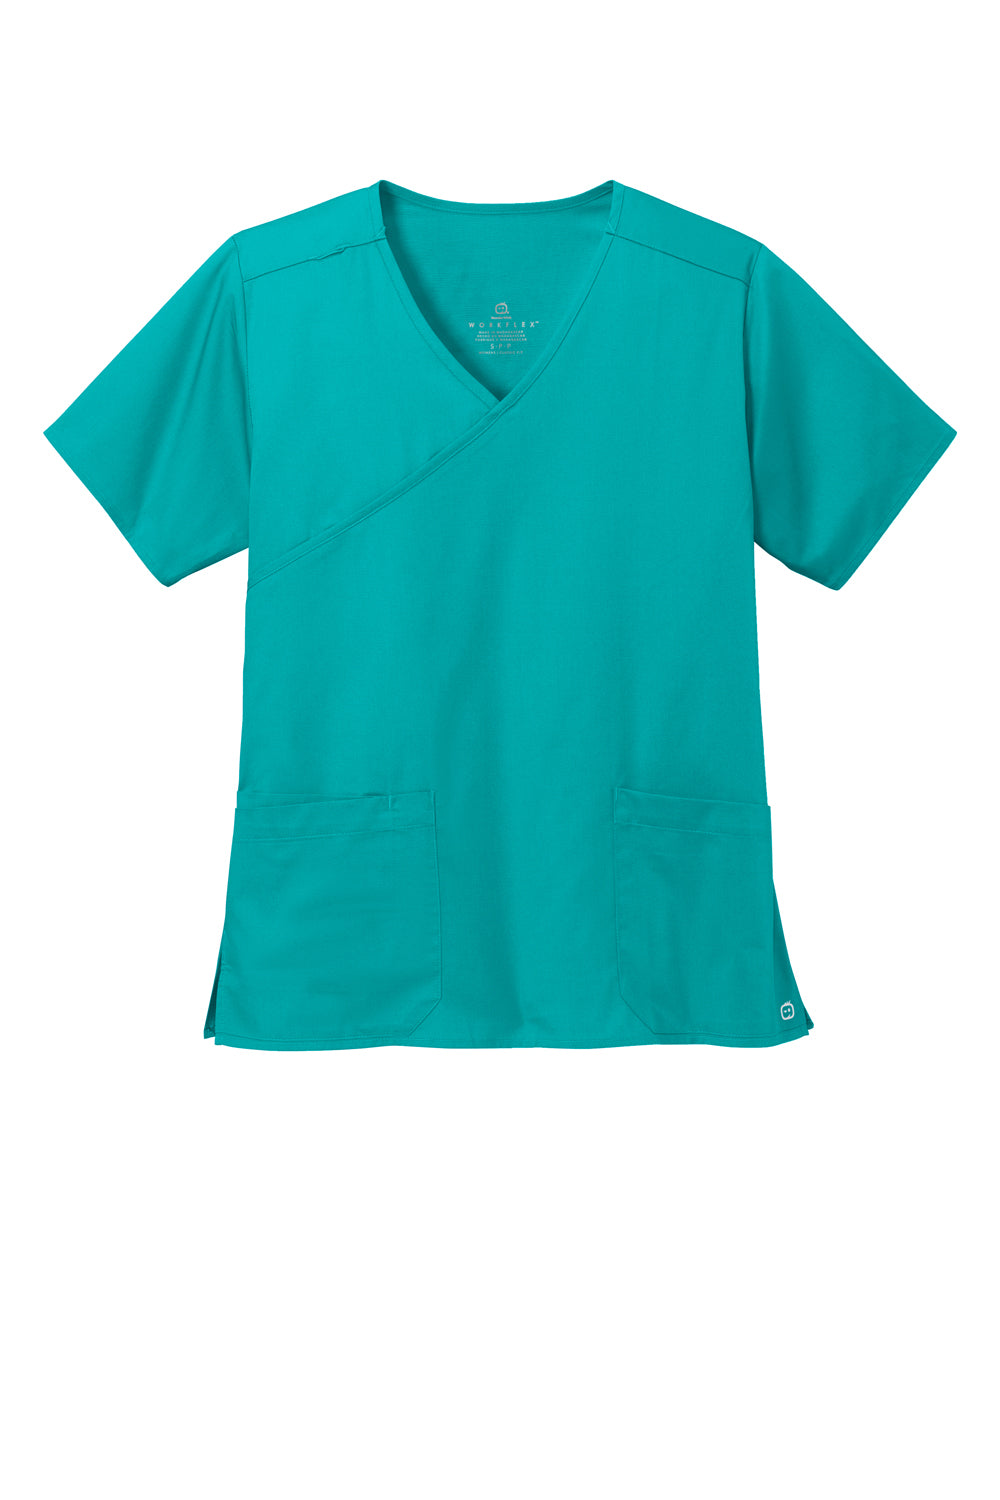 Wonderwink WW4760 WorkFlex Short Sleeve V-Neck Mock Wrap Shirt Teal Blue Flat Front